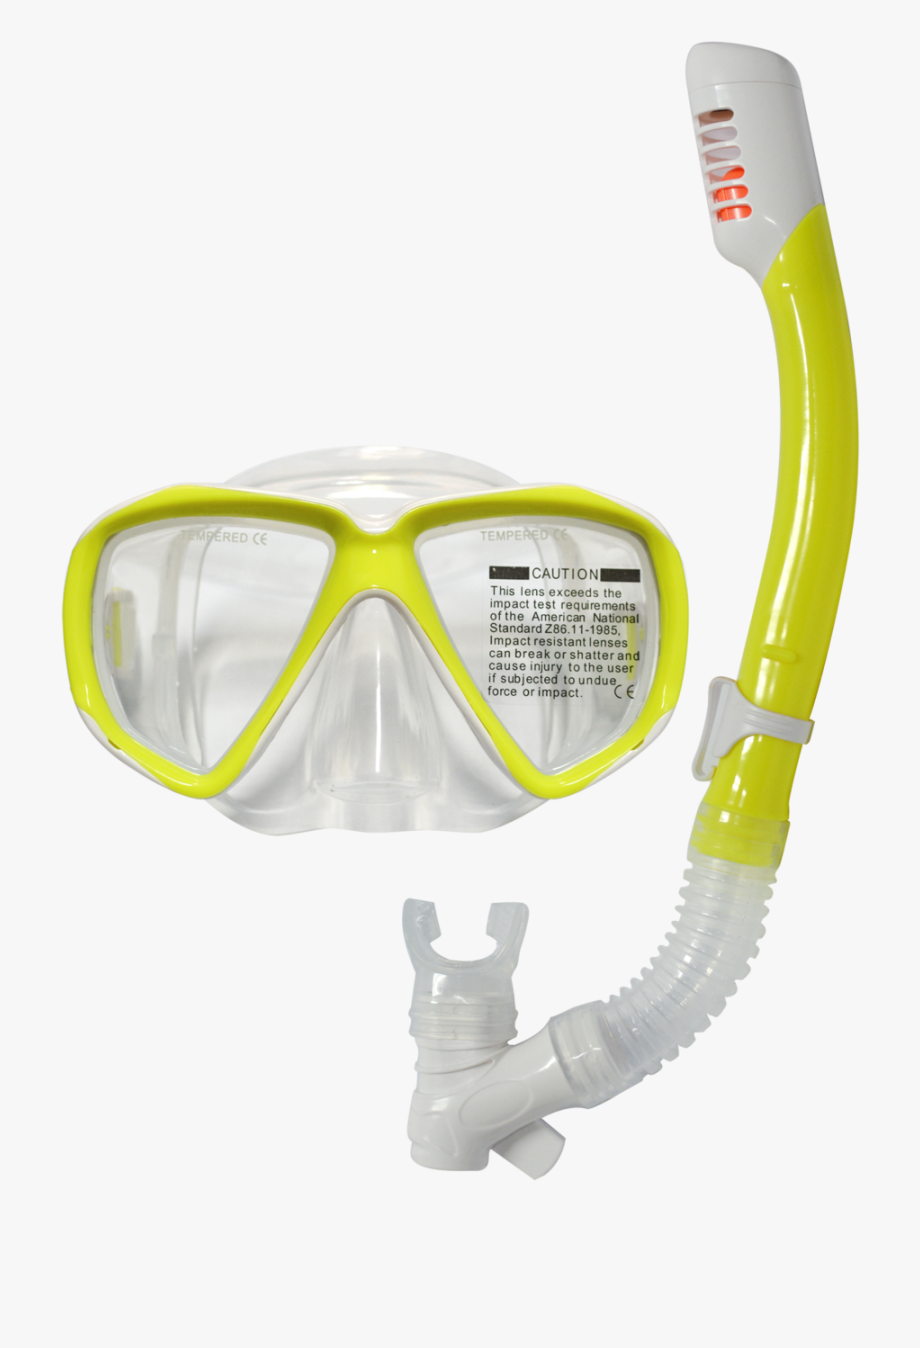 goggles clipart diving goggles